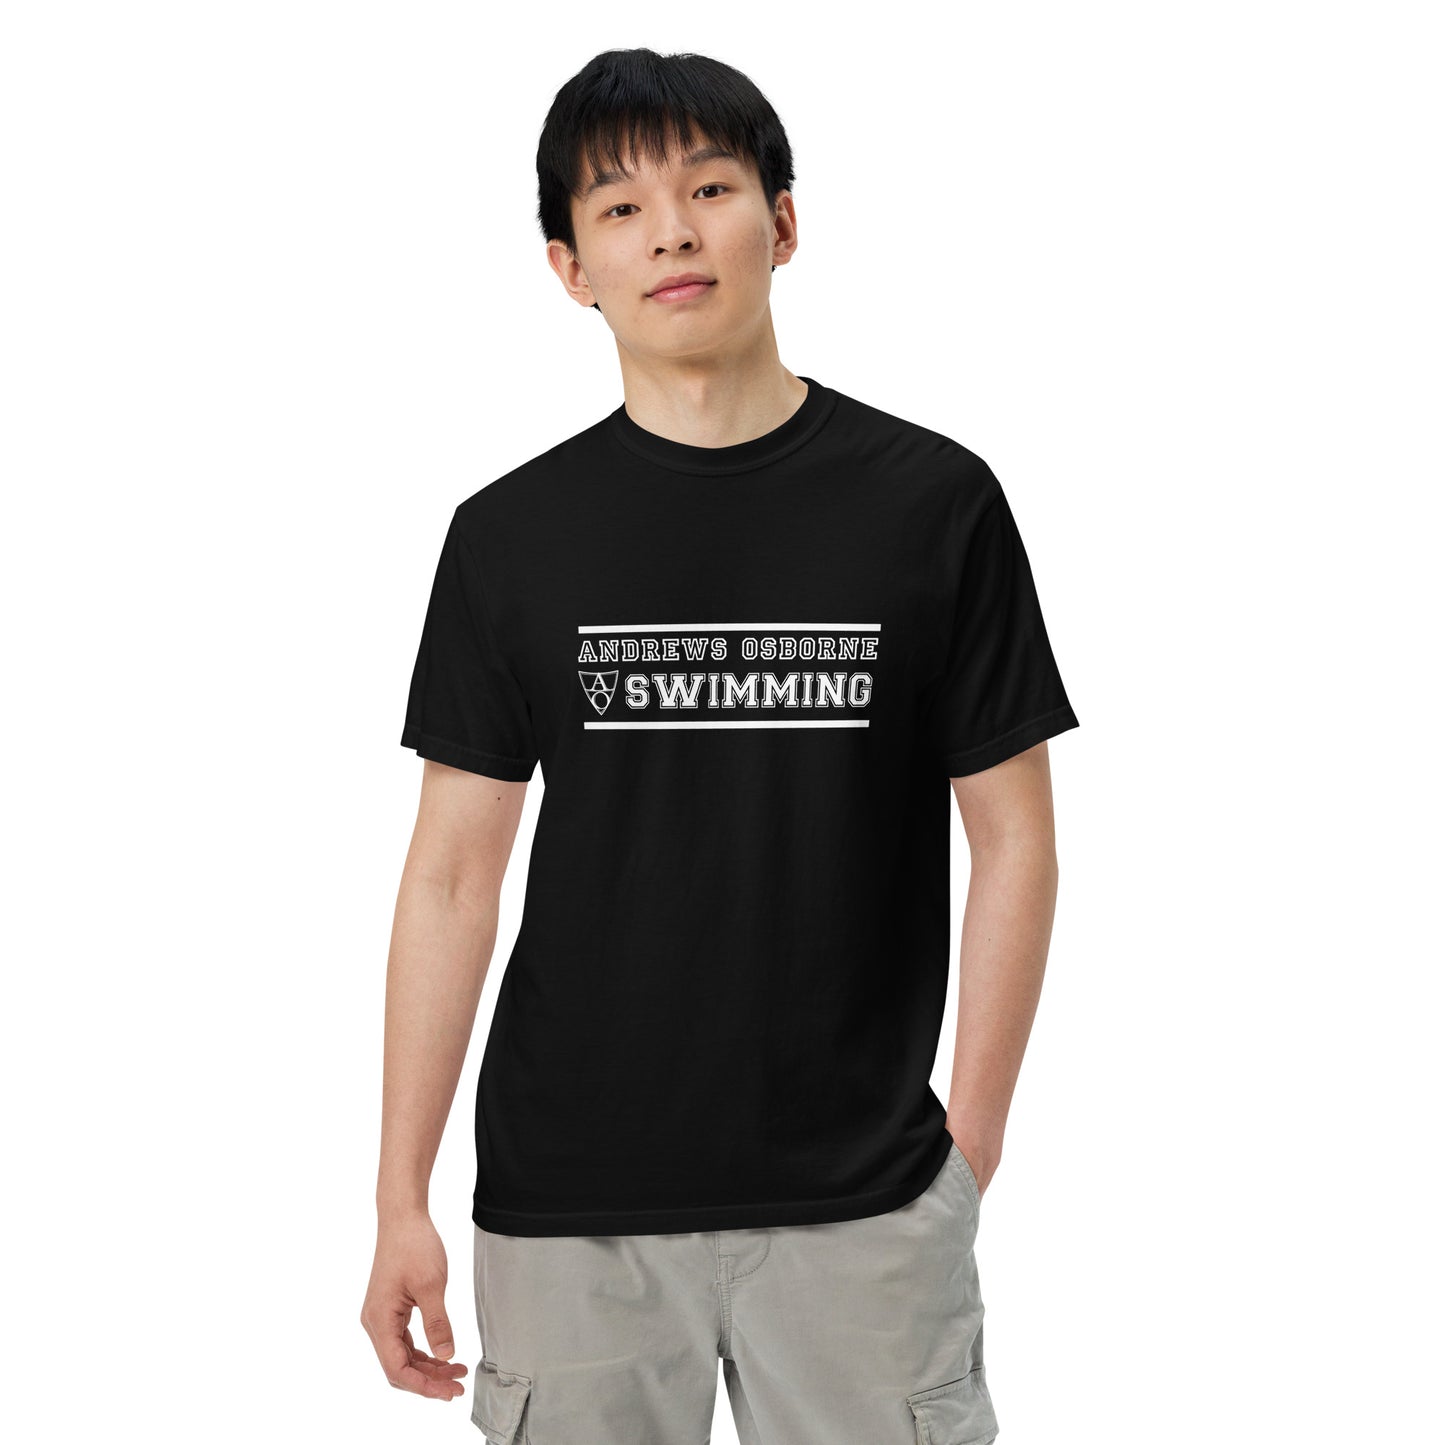 Unisex garment-dyed heavyweight t-shirt Andrews Osborne Swimming